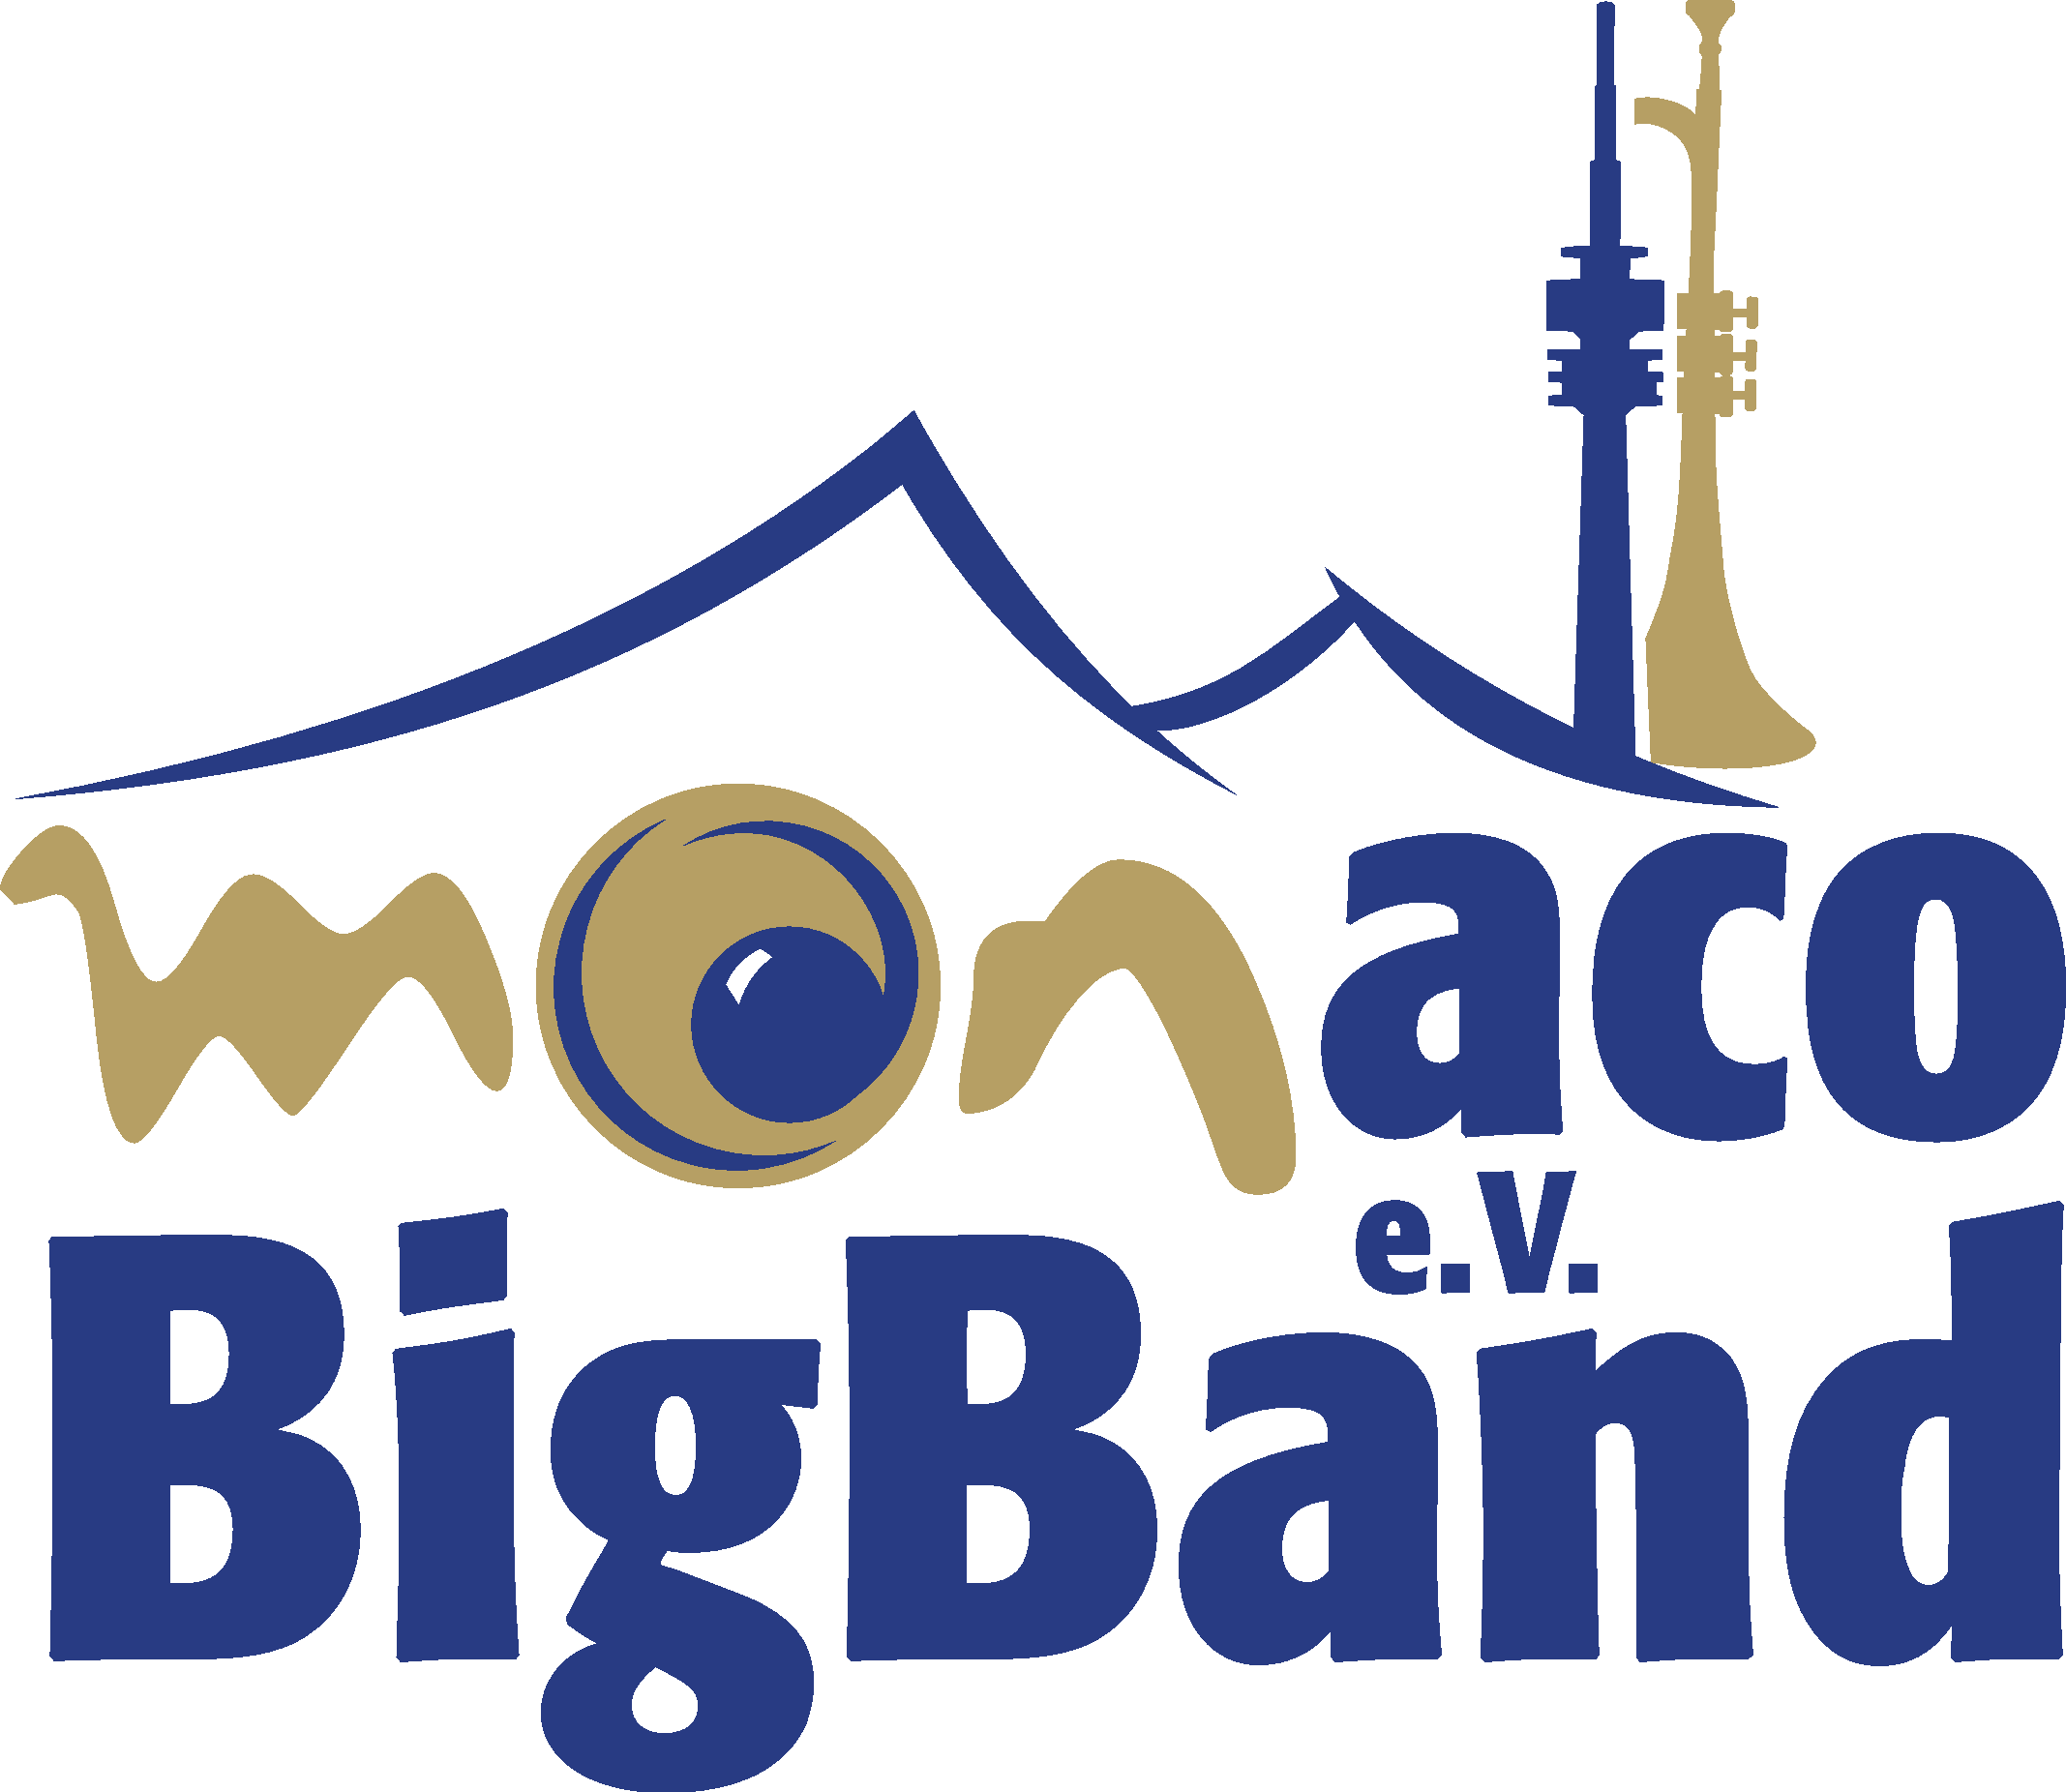 (c) Monaco-bigband.de